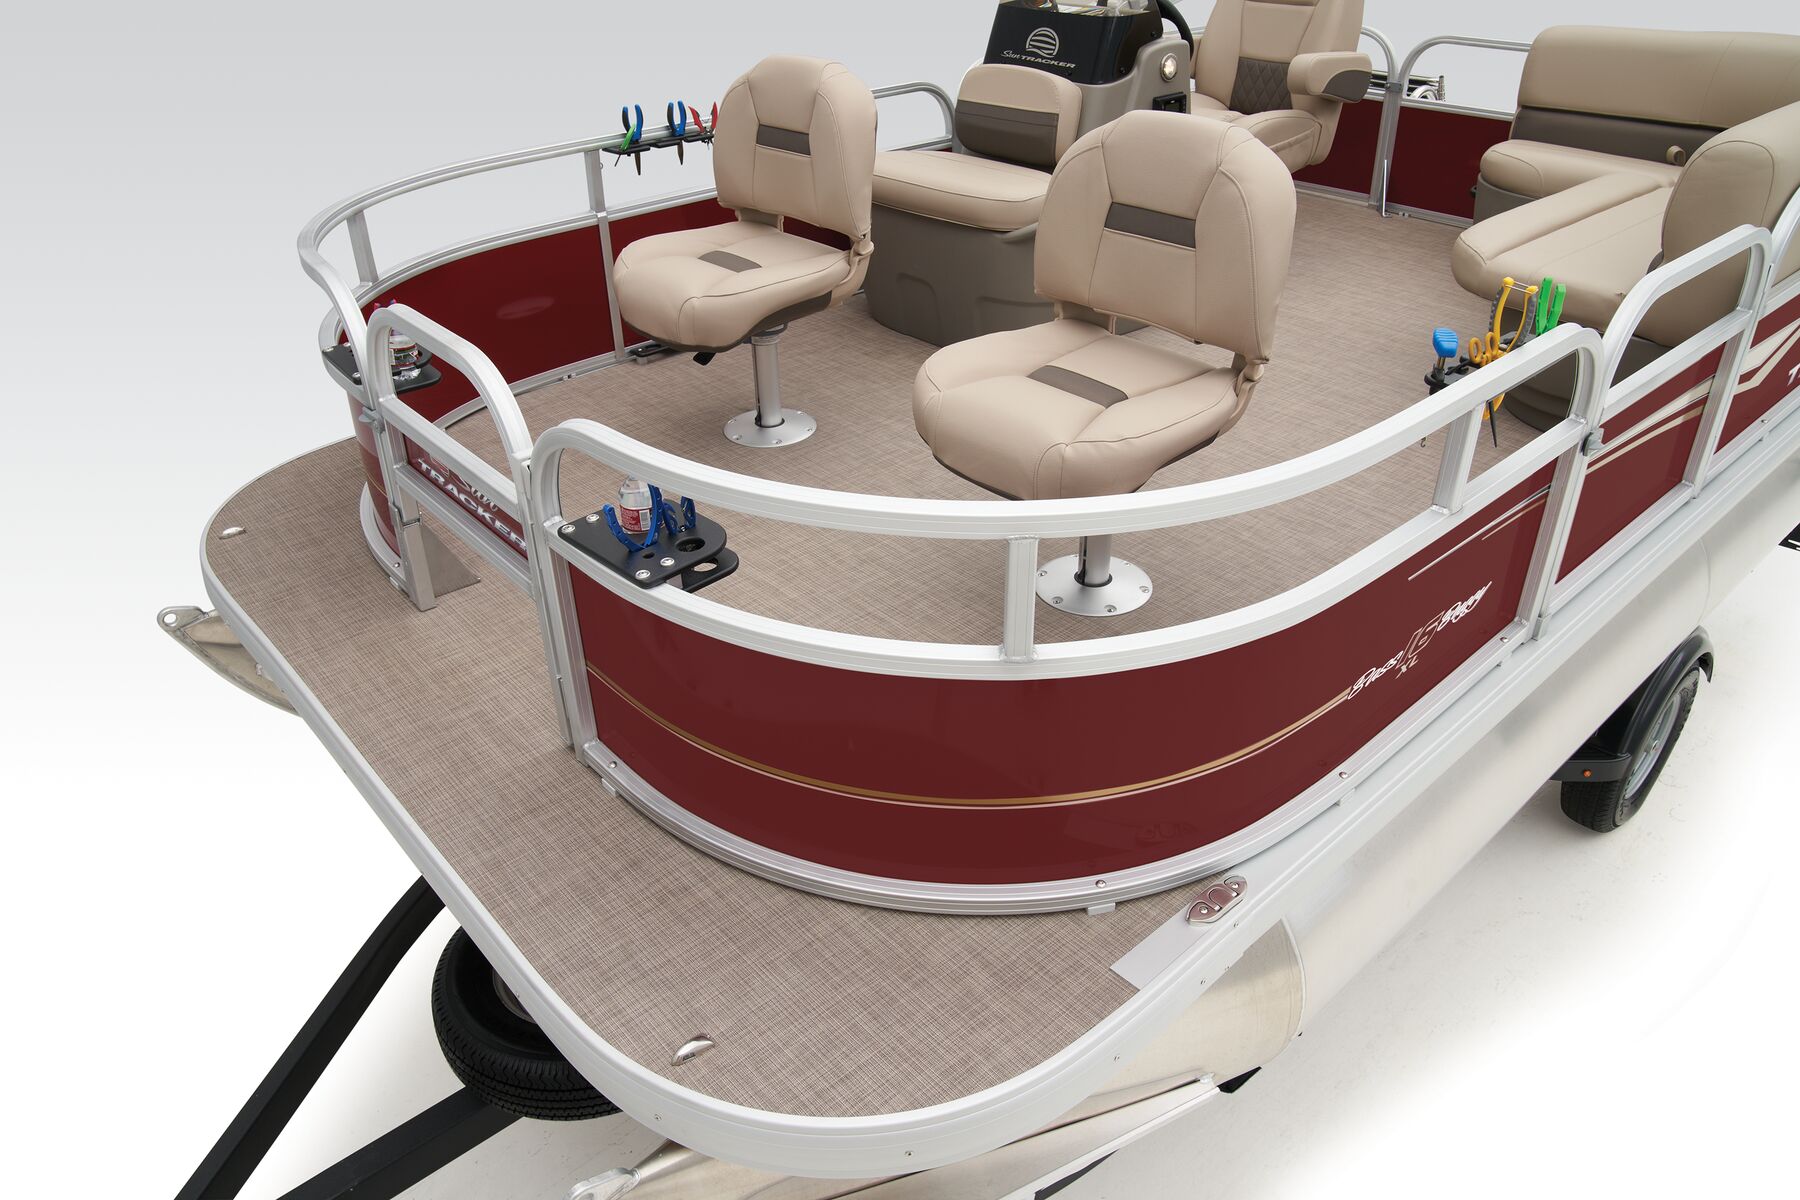 BASS BUGGY 16 XL Select - SUN TRACKER Fishing Pontoon Boat